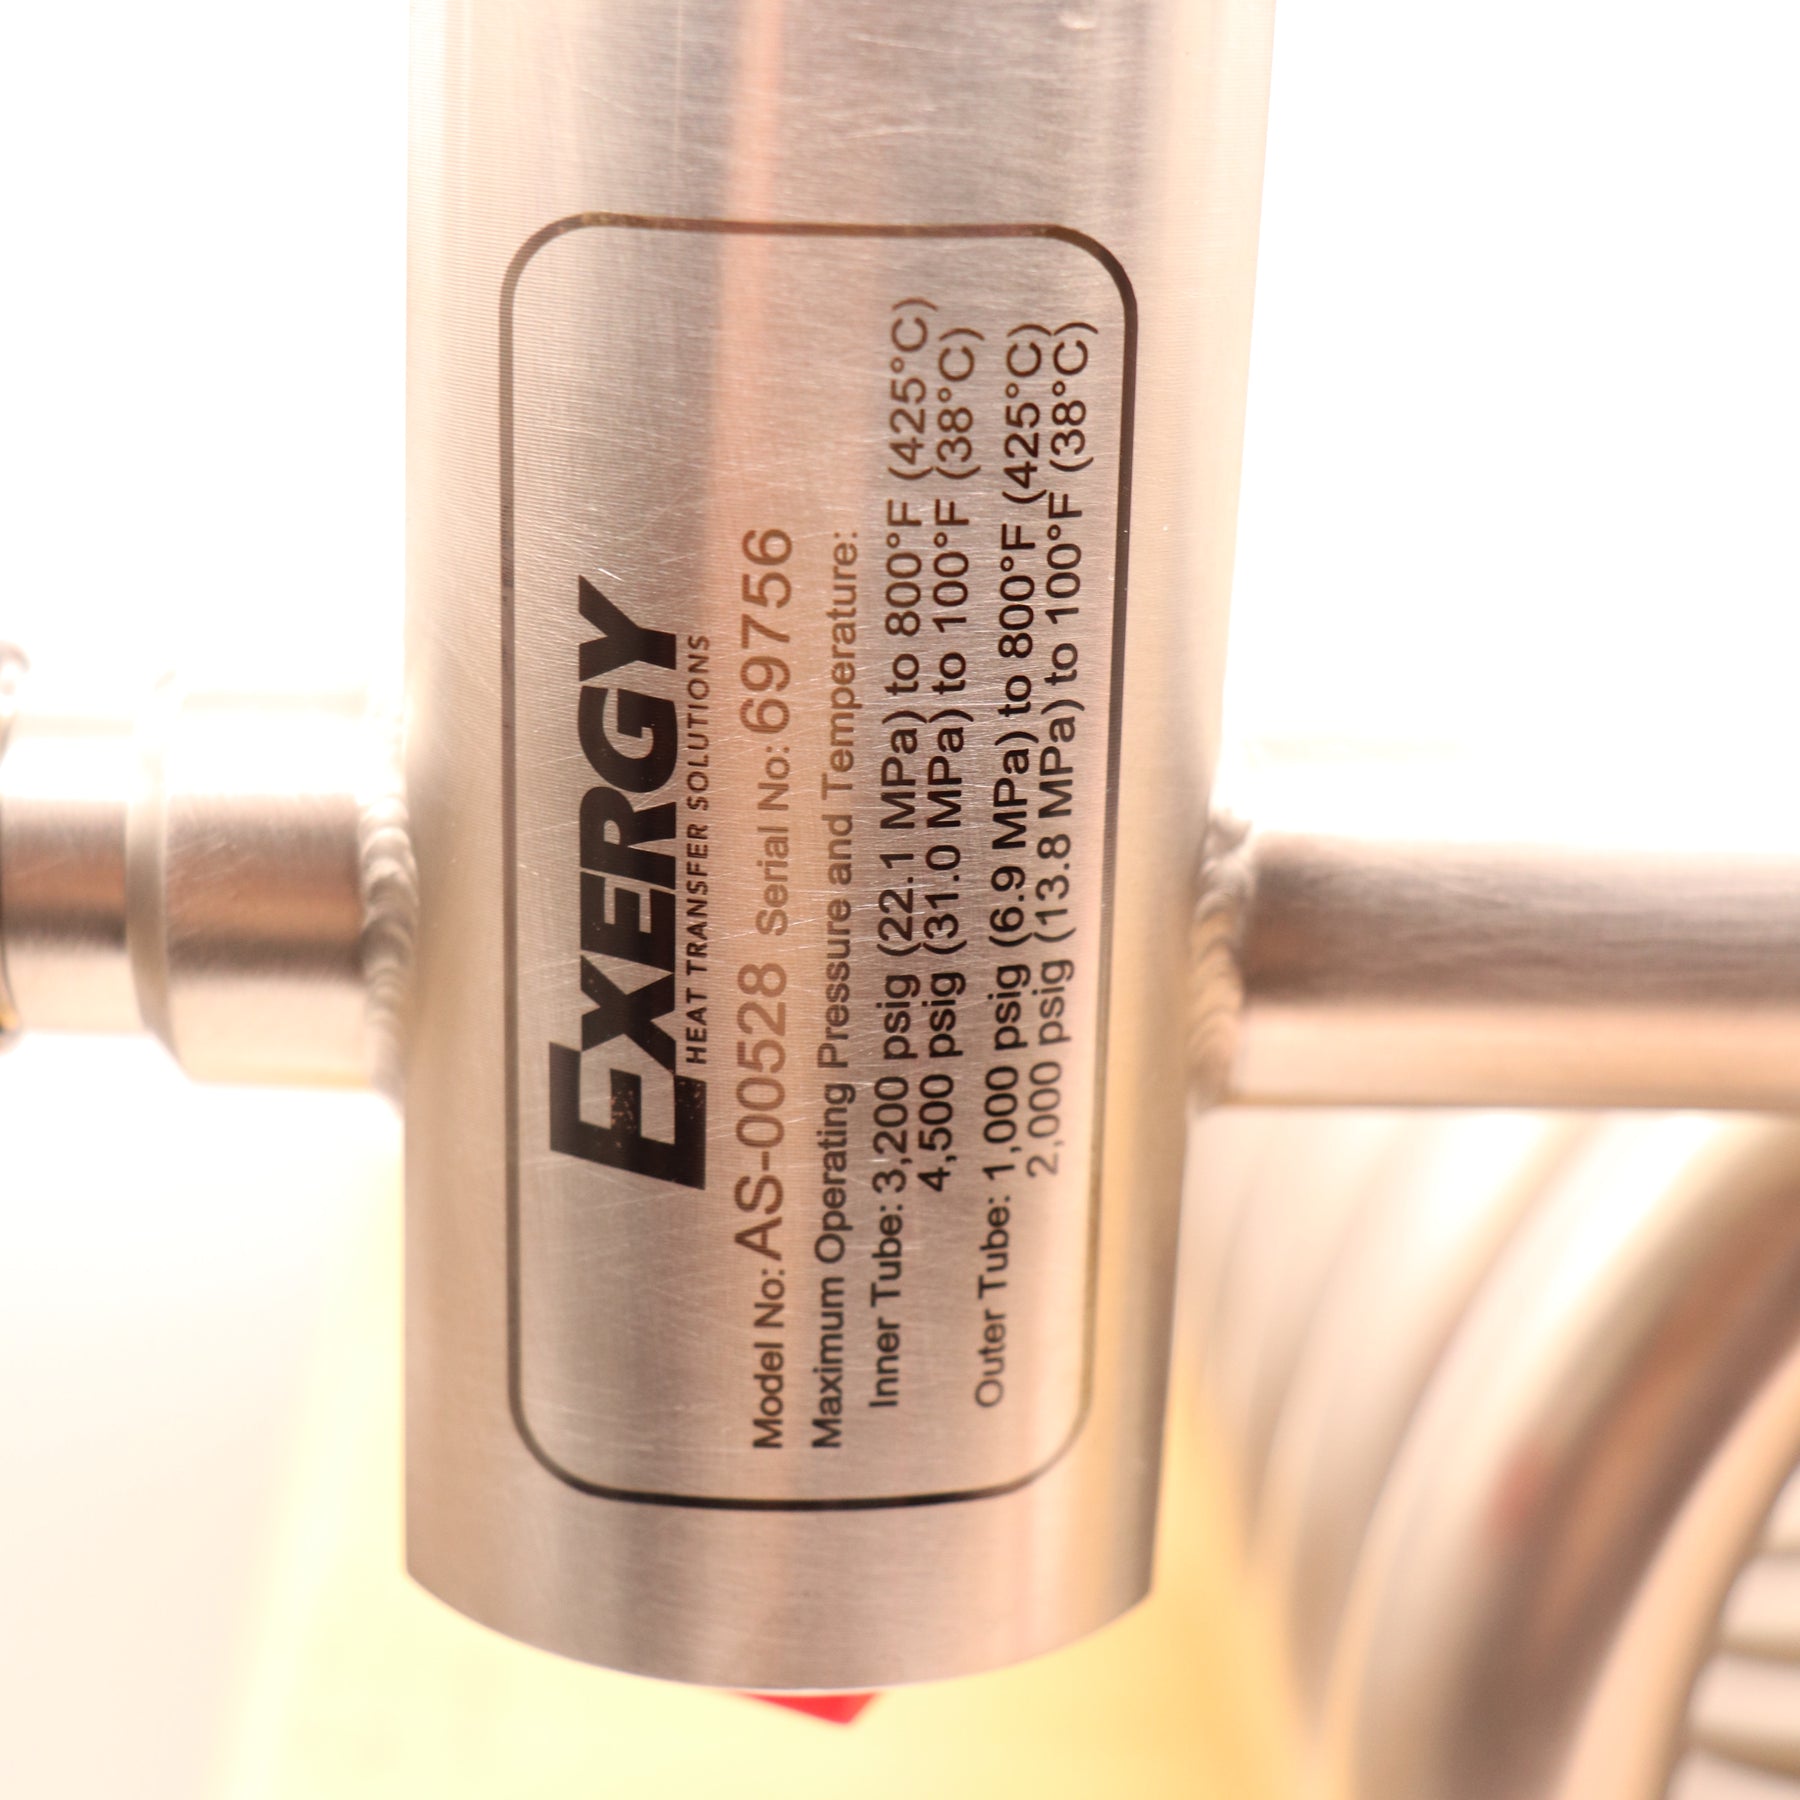 Exergy Stainless Steel Tube-in-tube Heat Exchanger AS-00528